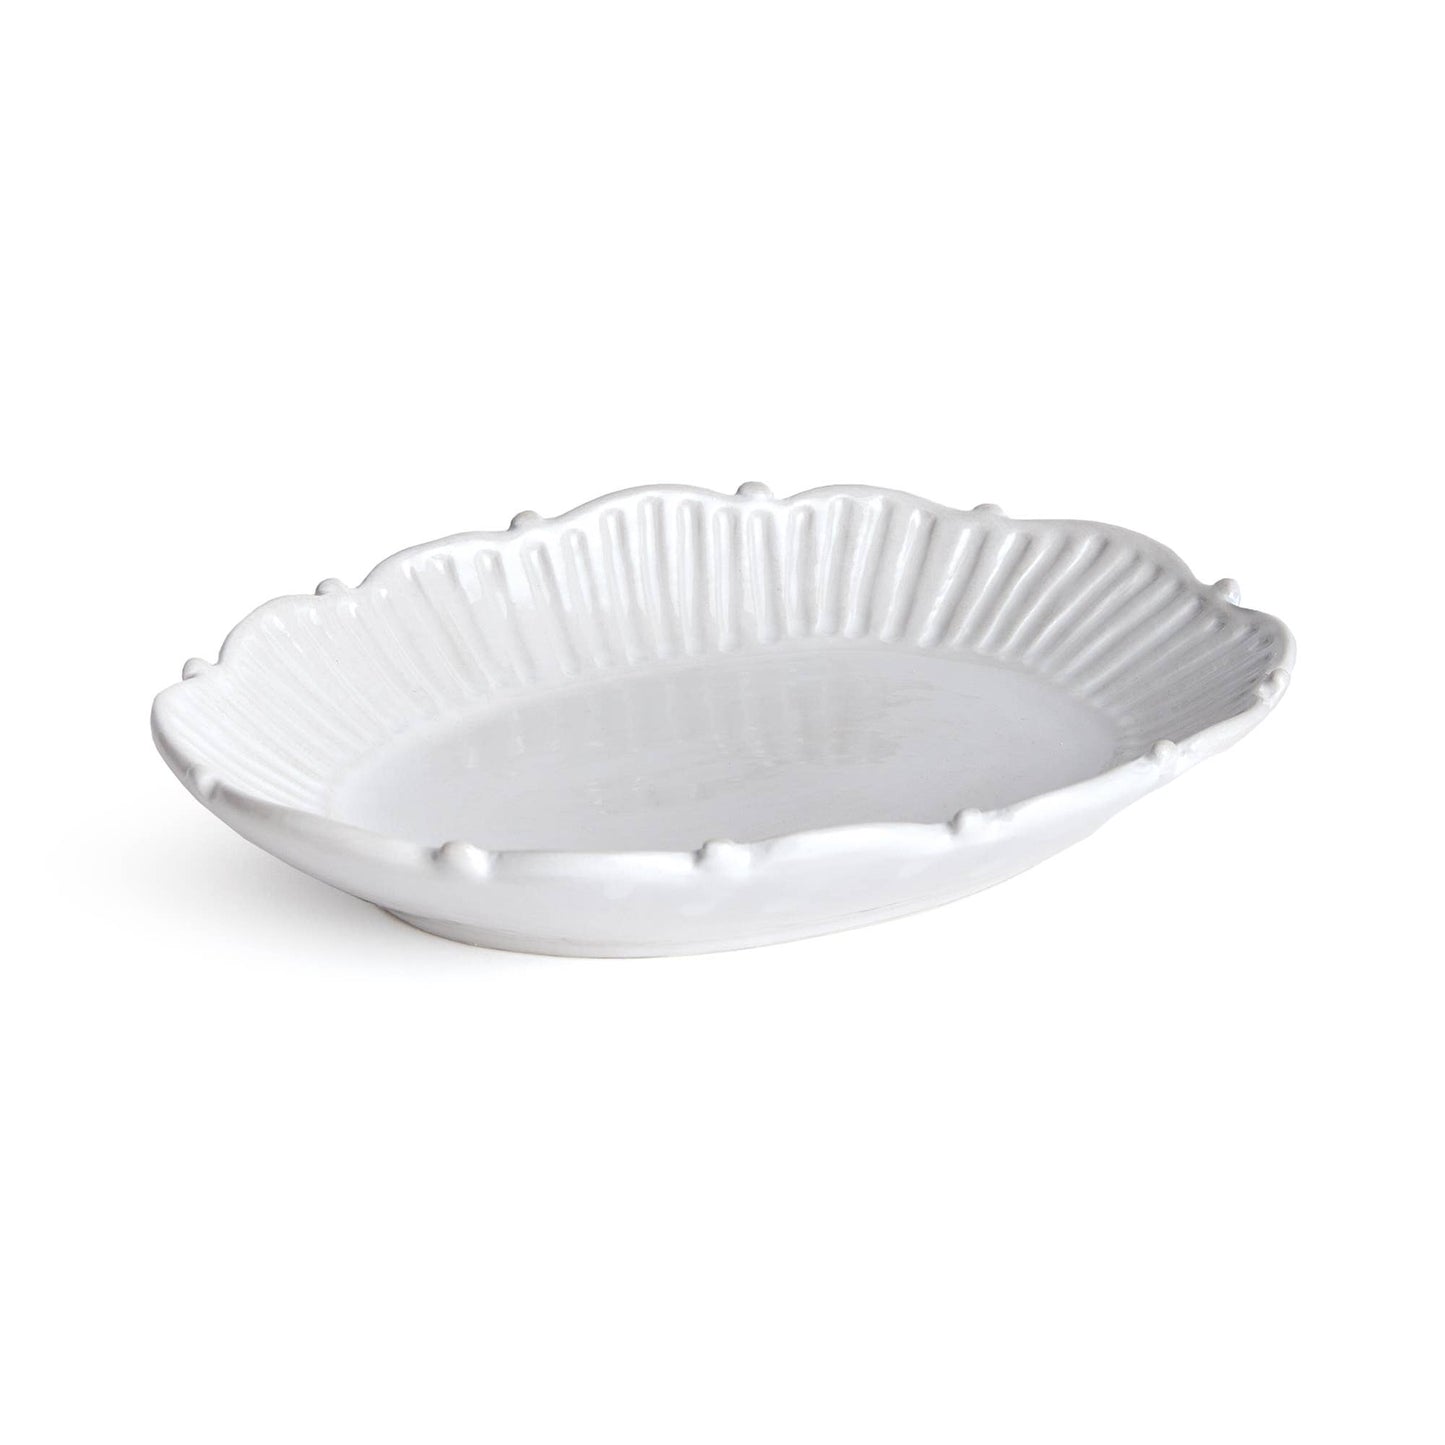 Mabel Round Serving Tray: White / Ceramic